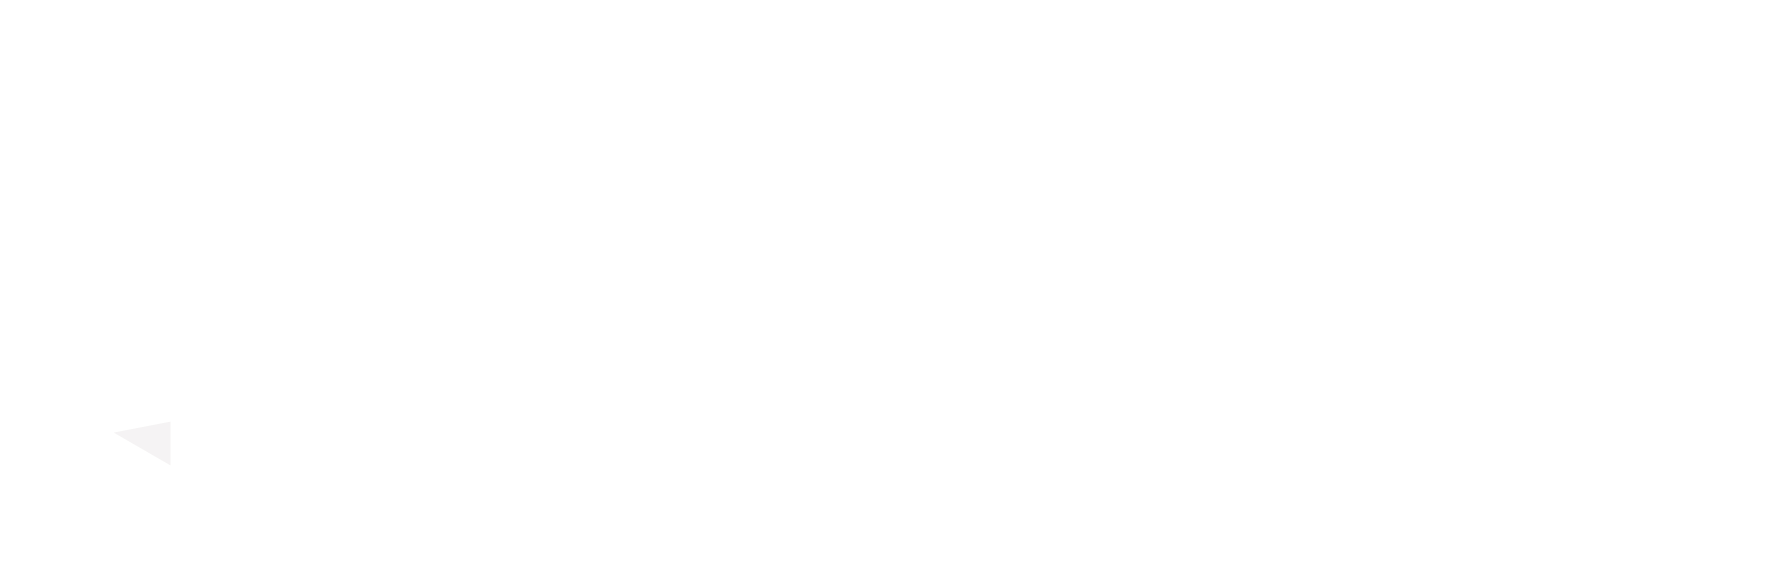 EHB Real Estate Investing  logo